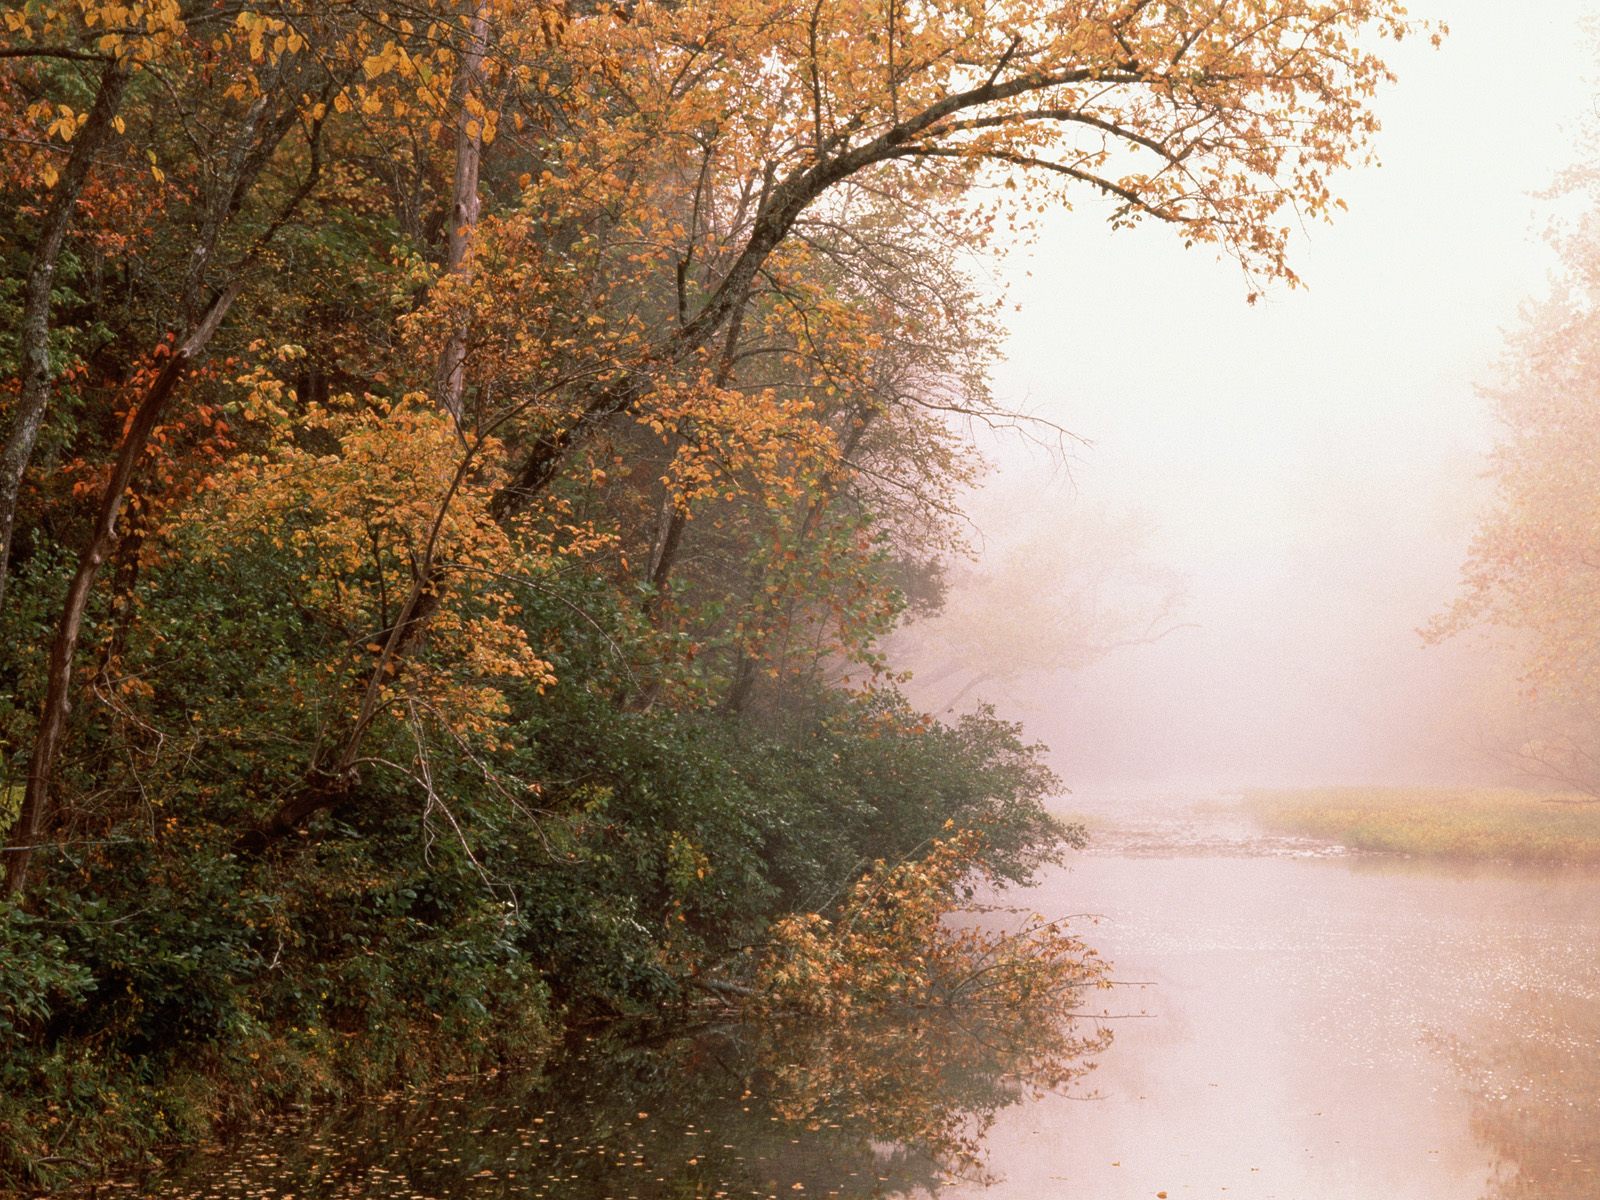 Fall foliage on Buffalo River in Arkansas.